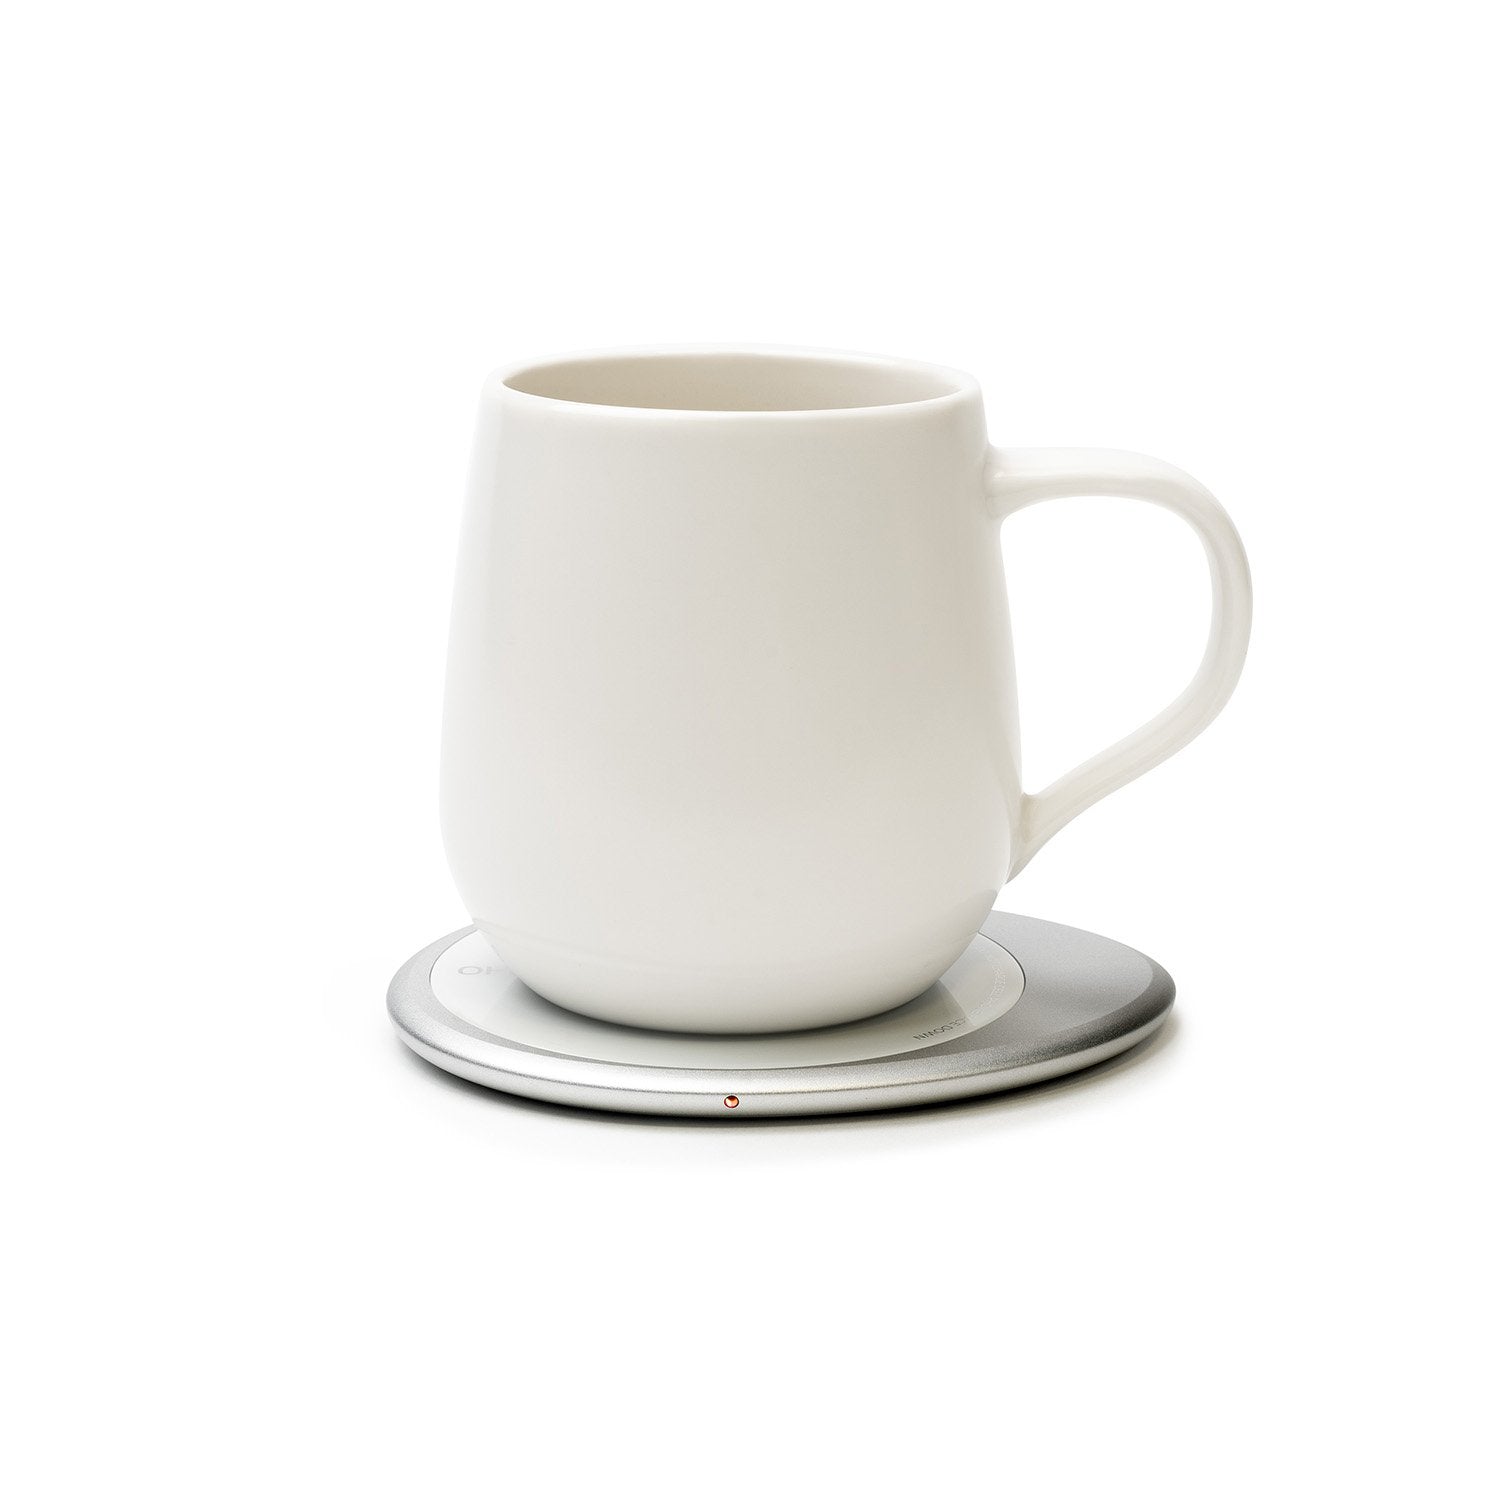 White mug on heating pad